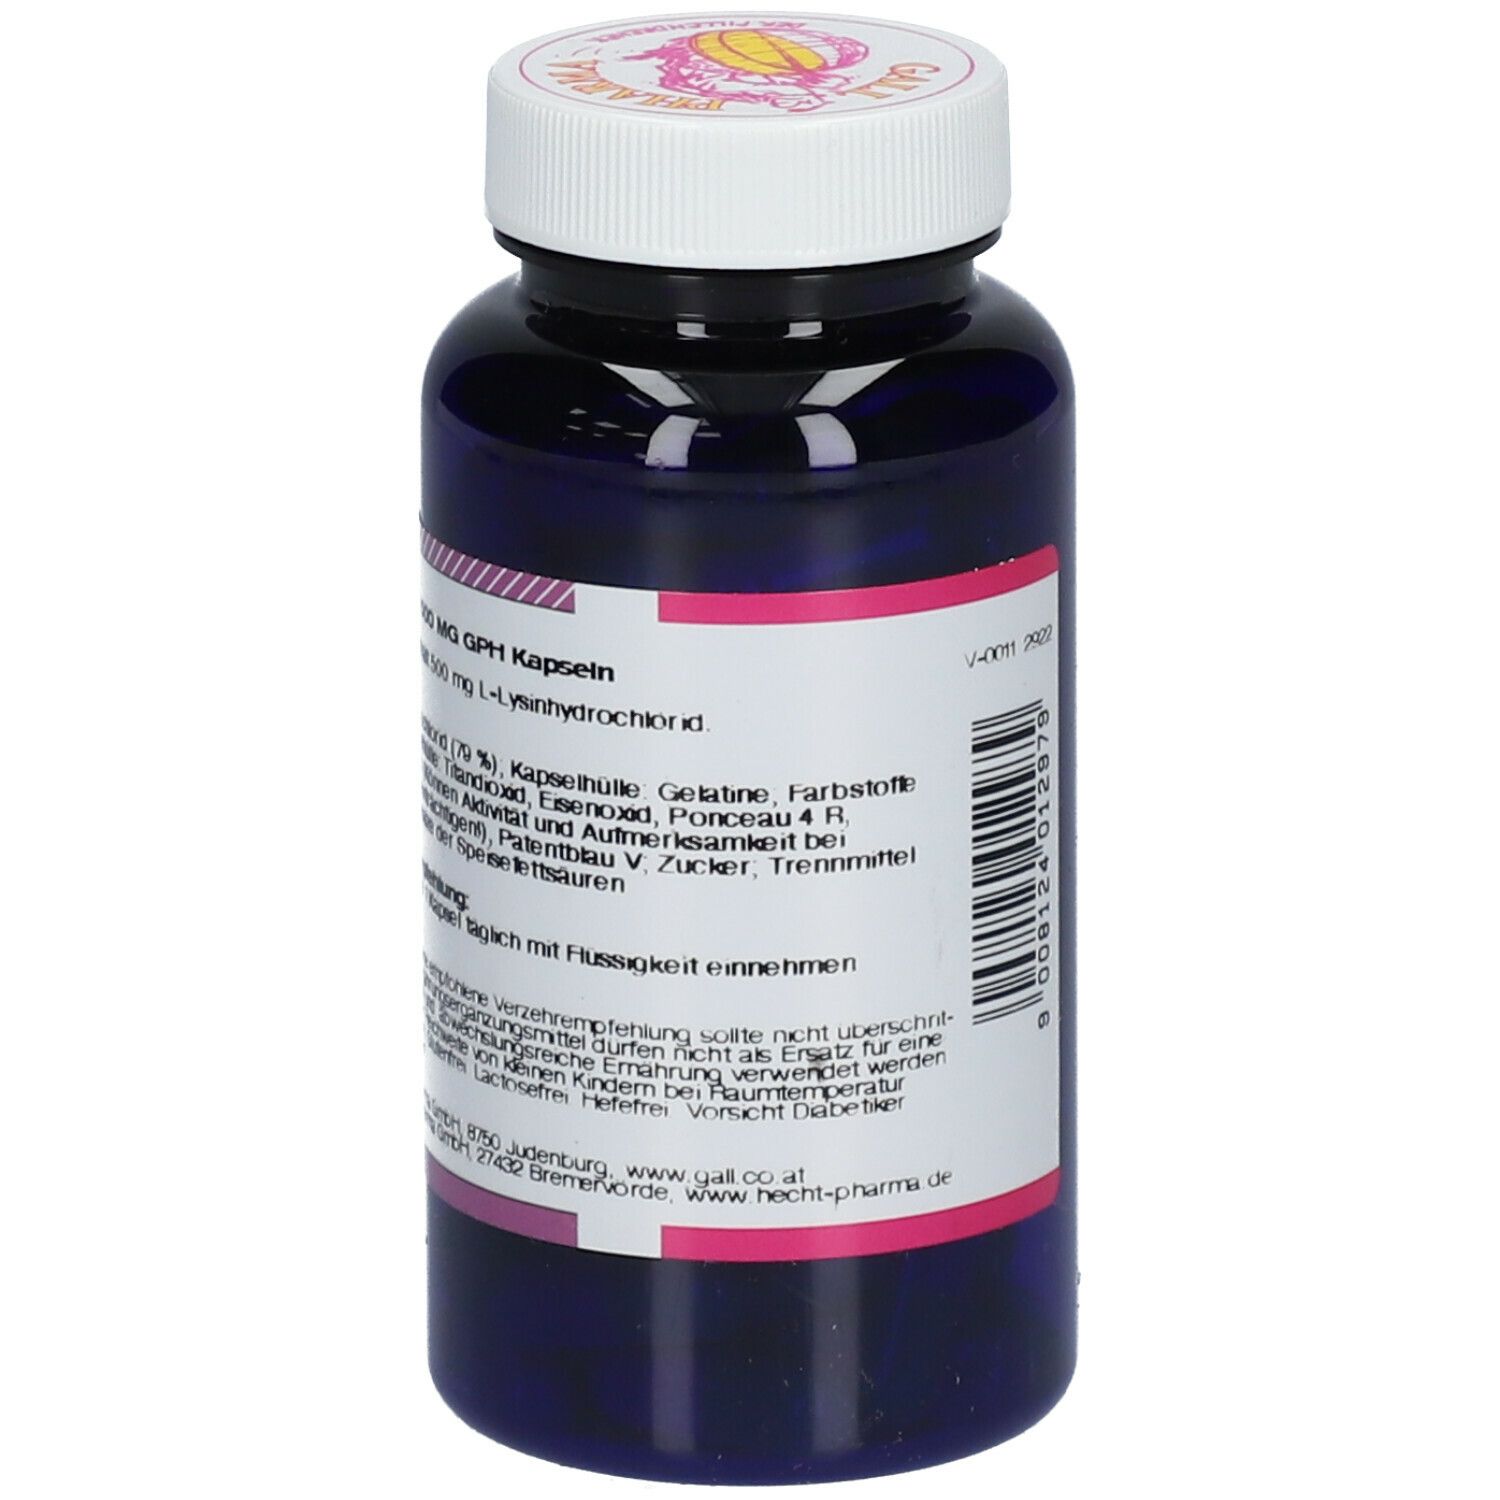 GALL PHARMA Lysin HCl 500 mg GPH Kapseln